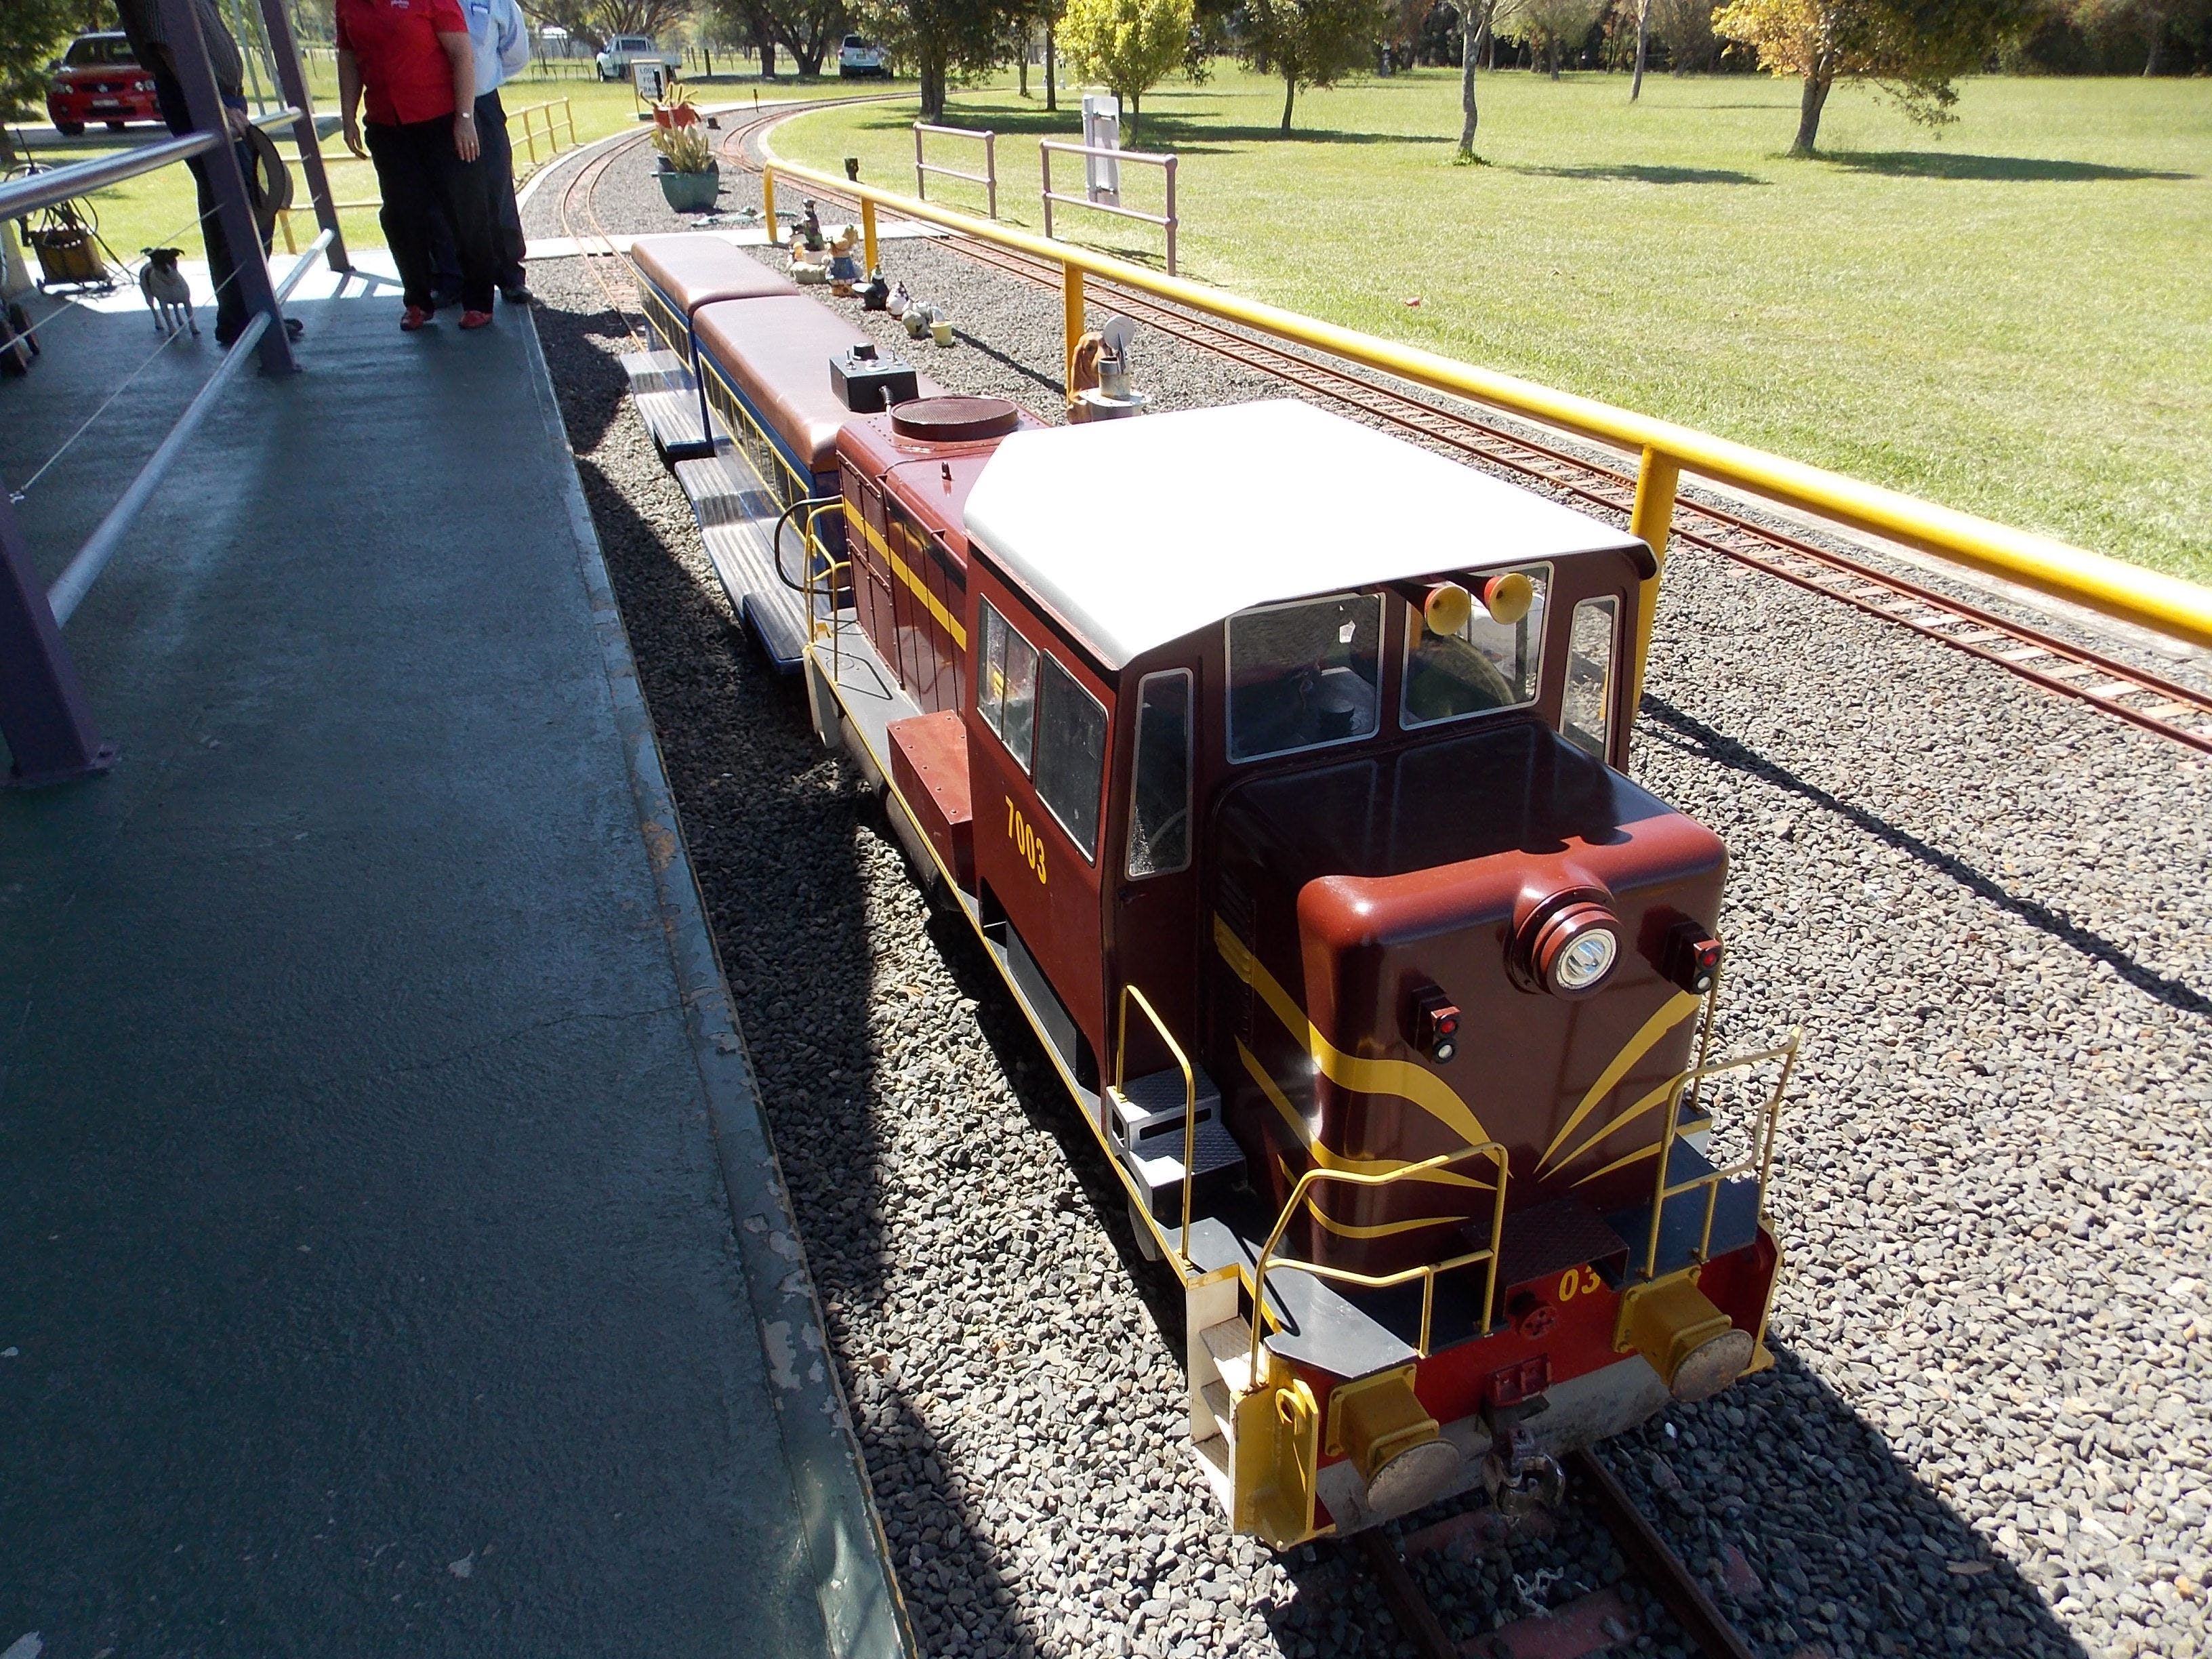 Penwood Miniature Railway - Wagga Wagga Accommodation